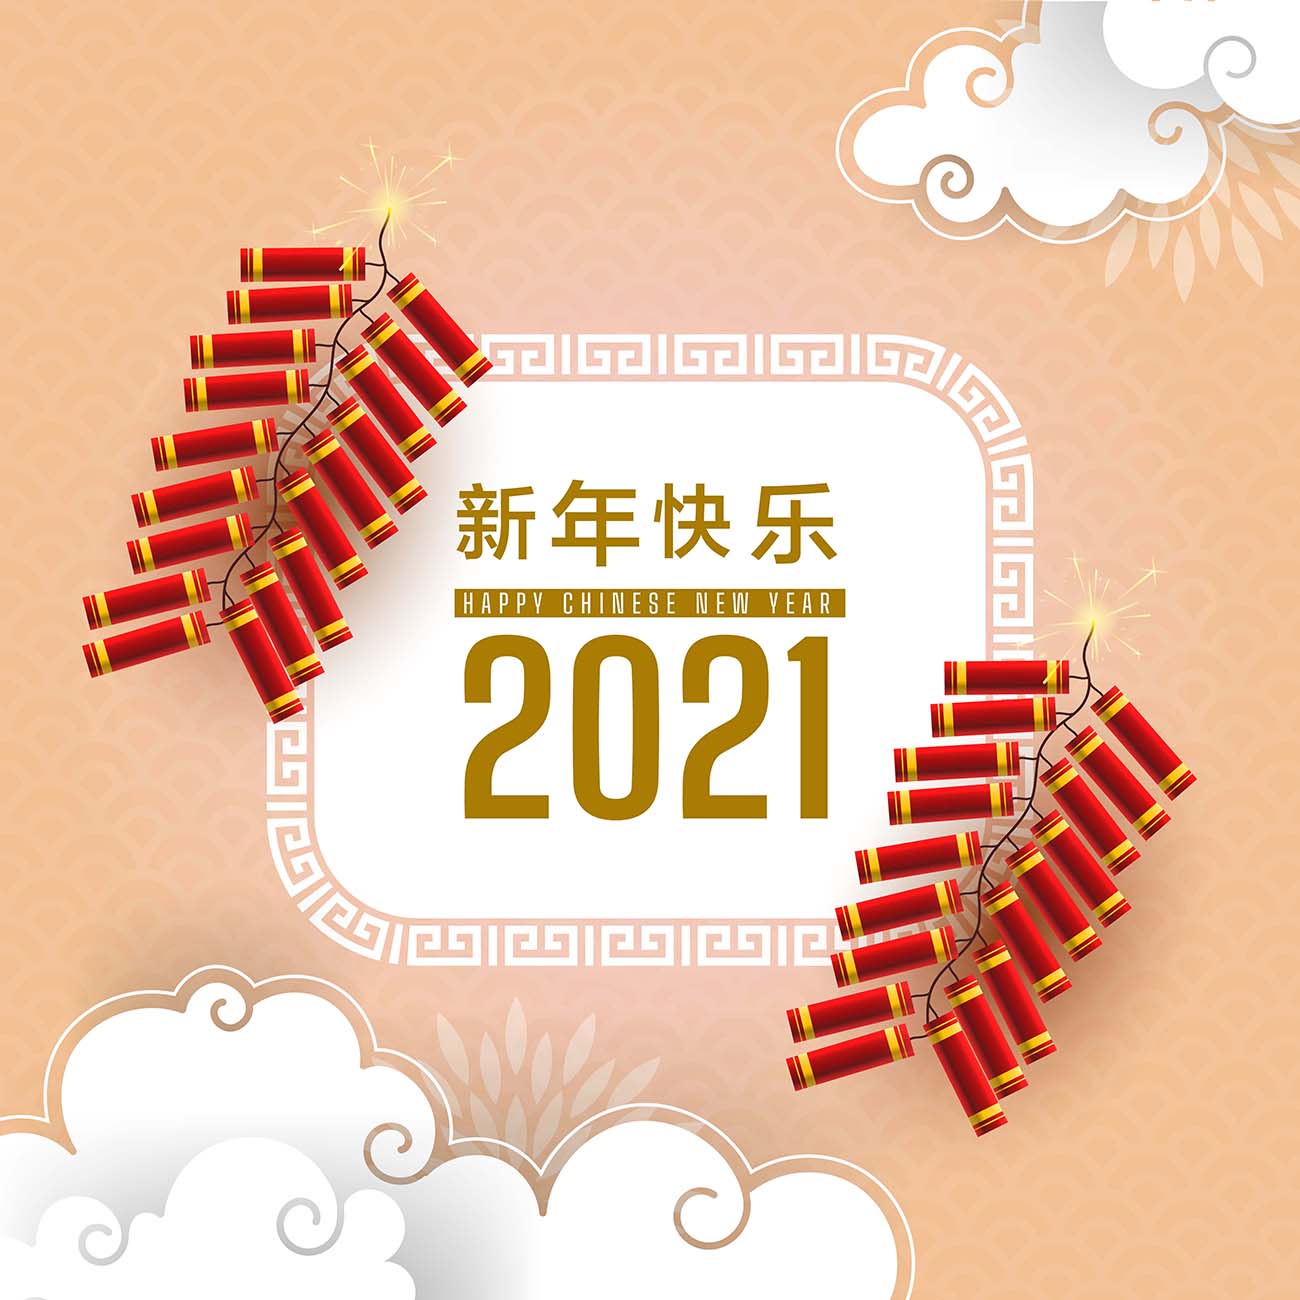 中国新年快乐2021年贺卡与烟花矢量源文件happy-chinese-new-year-2021-greeting-card-with-fireworks